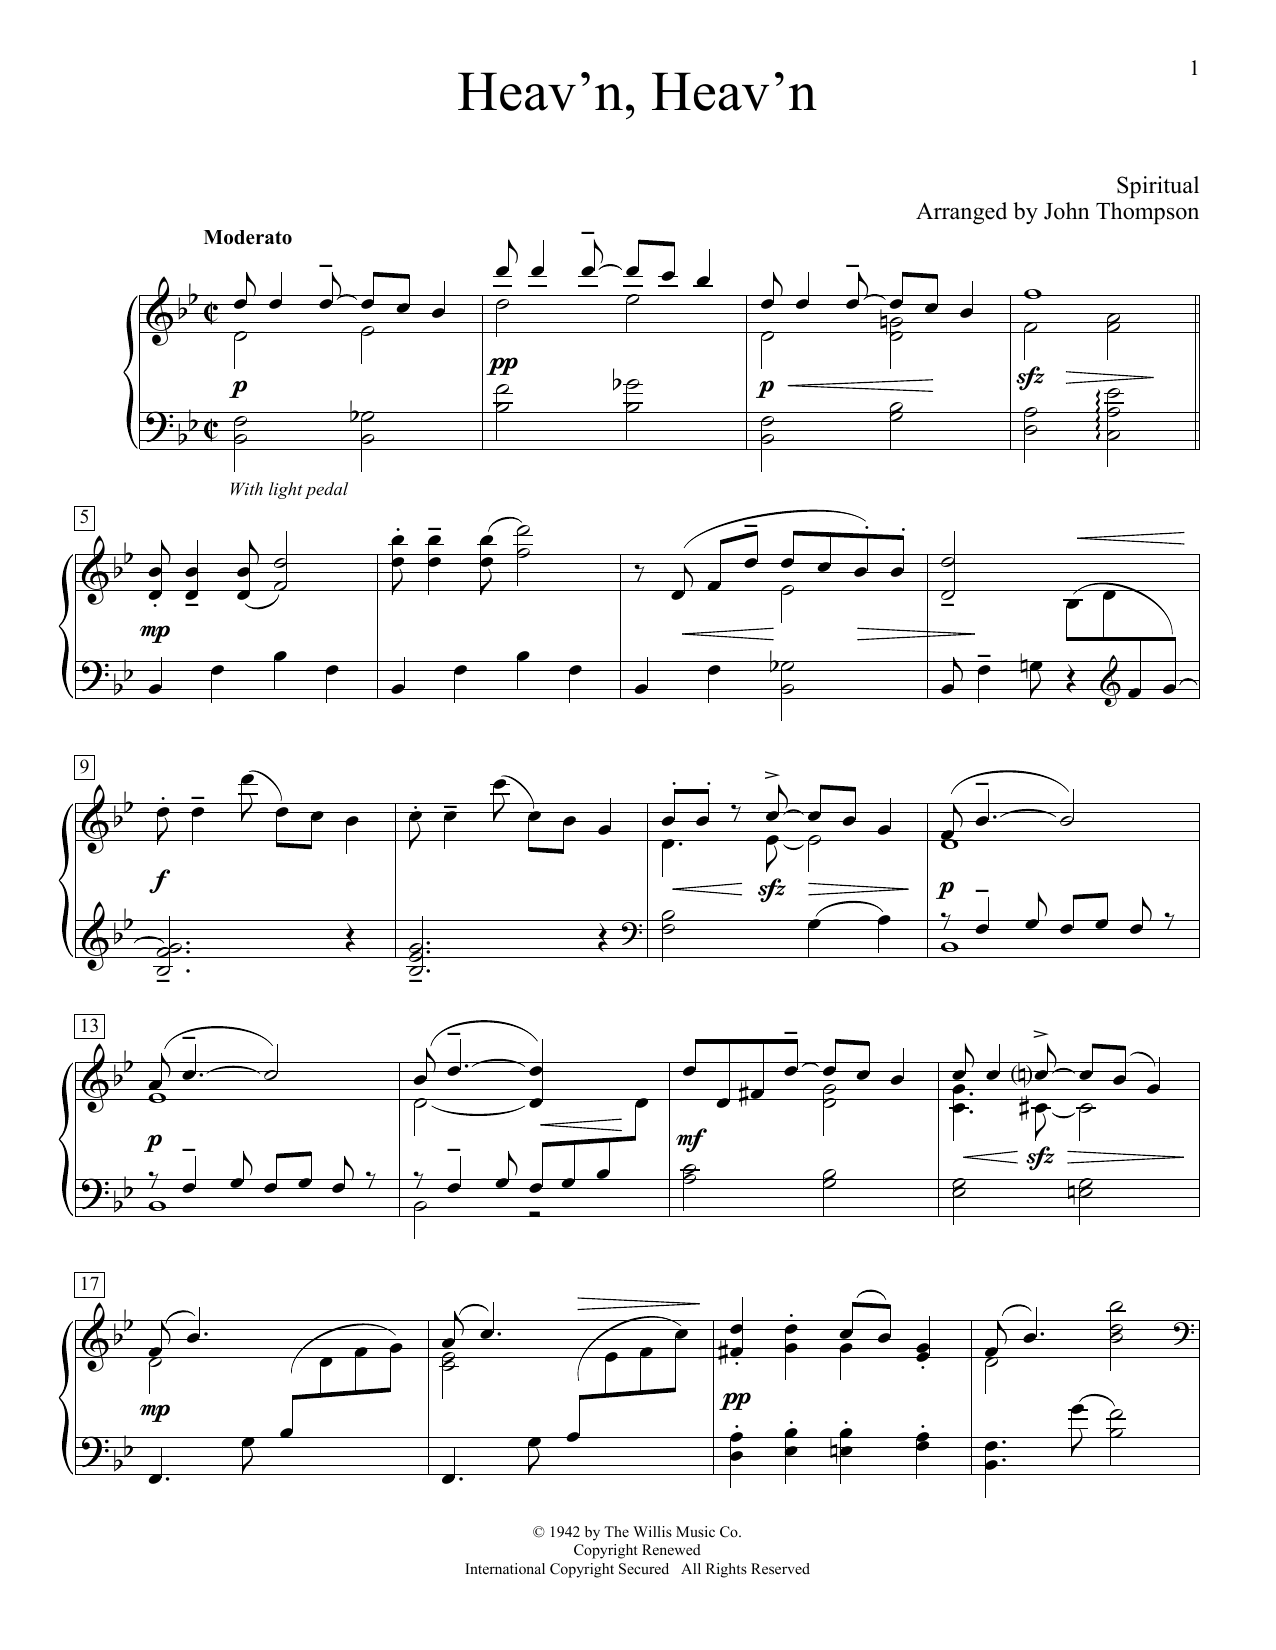 Download Traditional Spiritual Heav'n, Heav'n Sheet Music and learn how to play Easy Piano PDF digital score in minutes